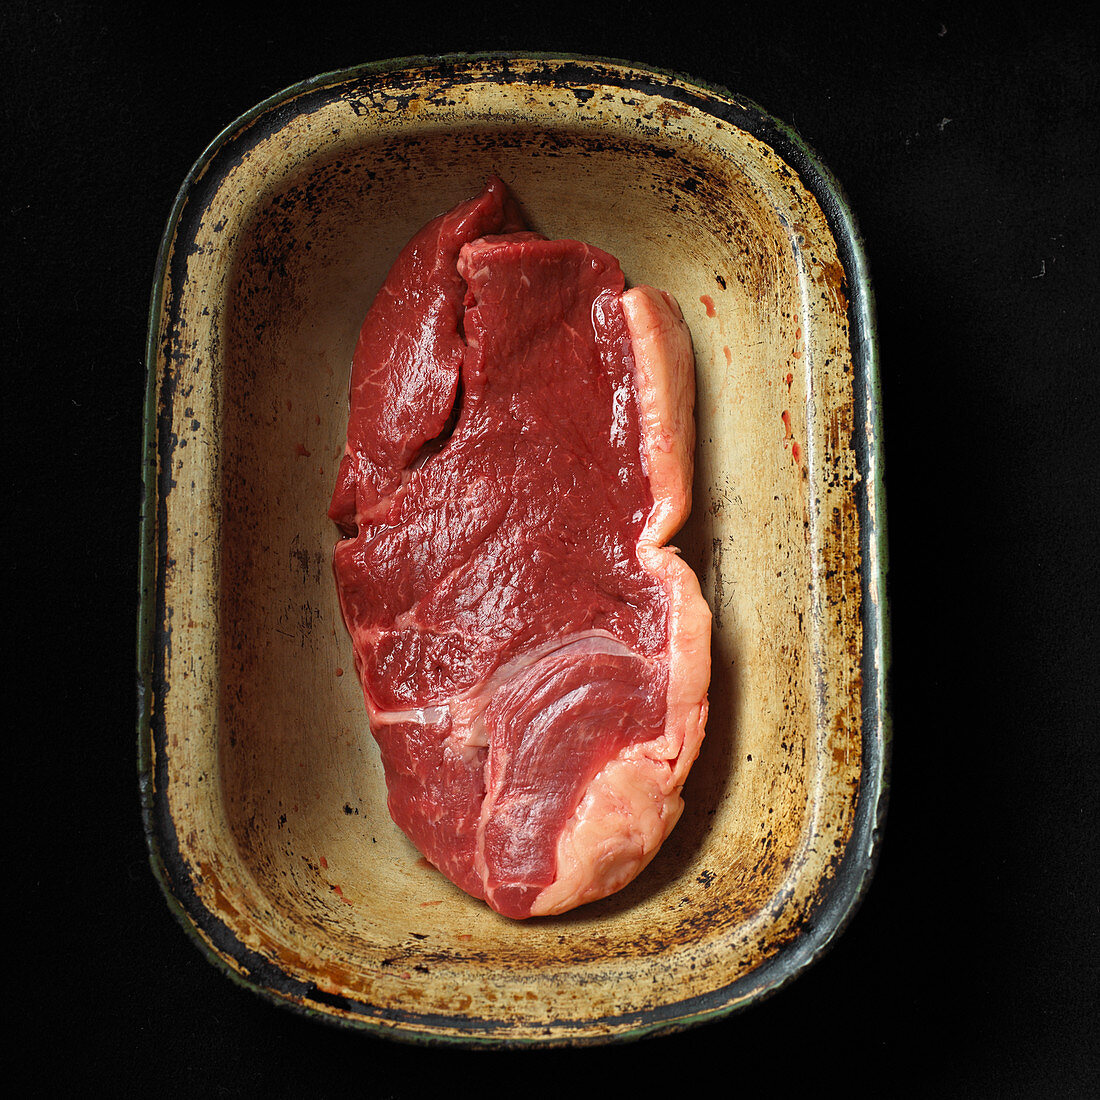 Raw beef steak in an old roasting dish